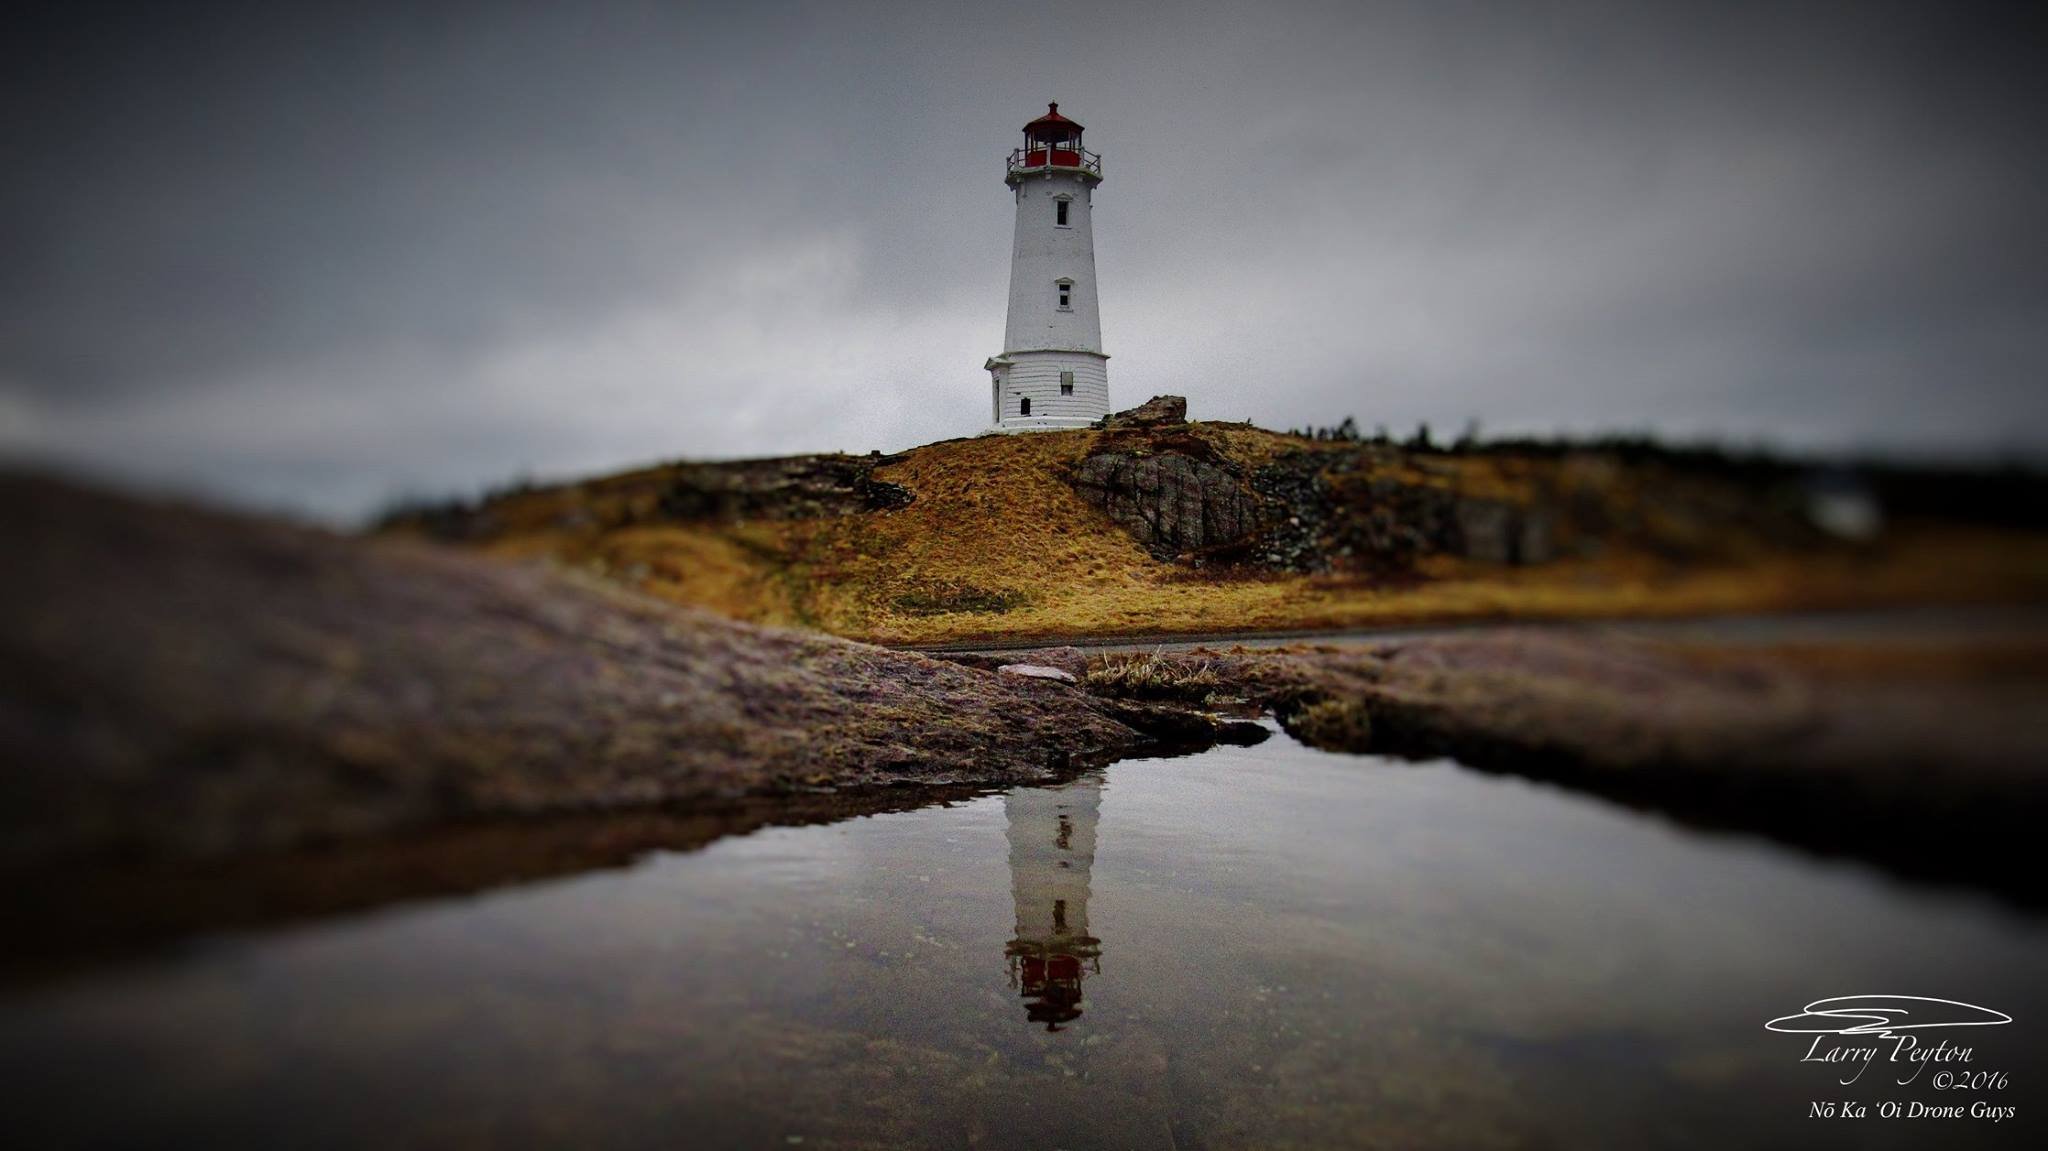 Nova Scotia / Louisbourg Lighthouse
Source: [url=http://bitstop.squarespace.com]Bit Stop[/url]
Keywords: Nova Scotia;Canada;Atlantic ocean